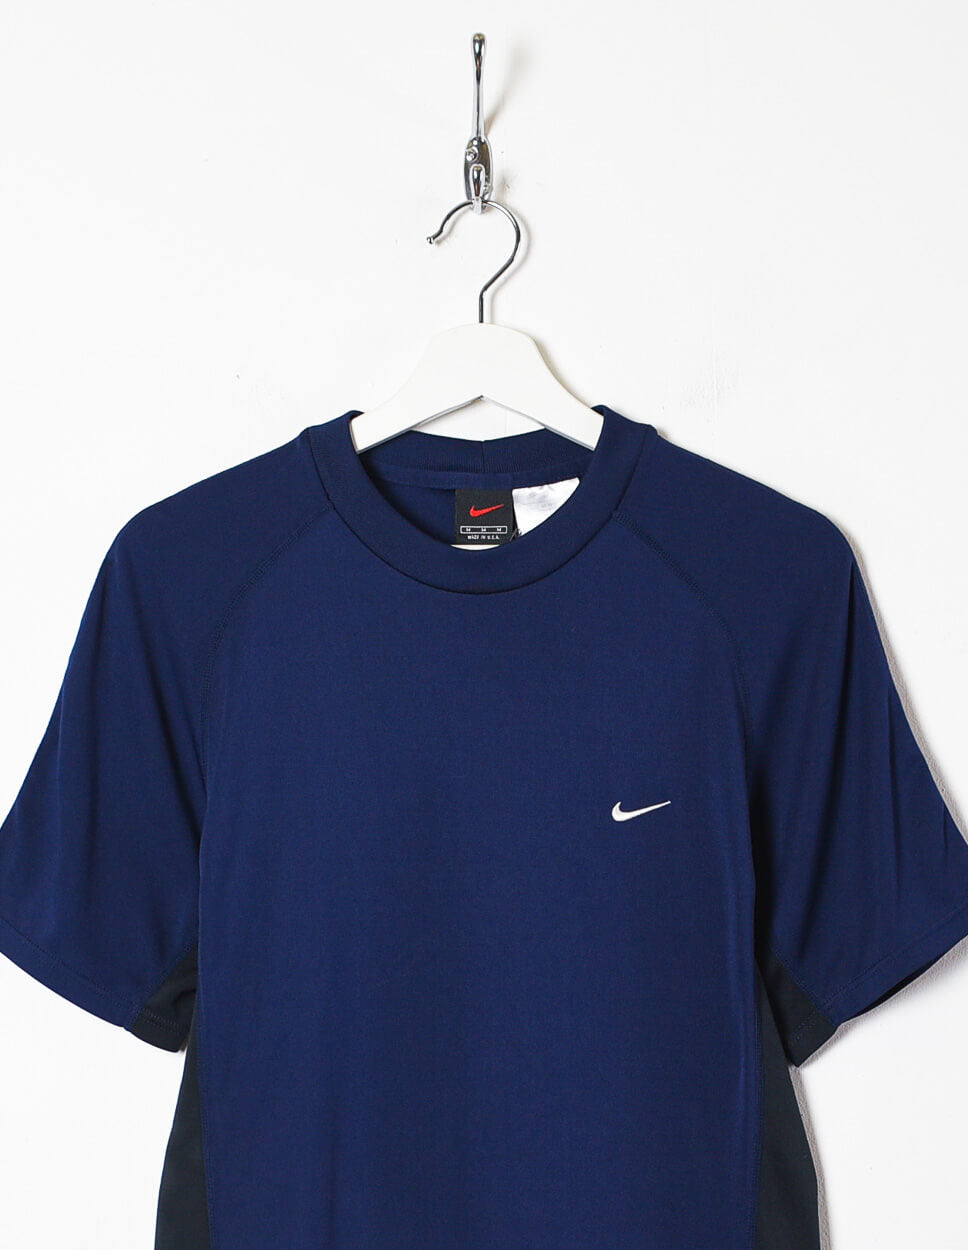 Navy Nike Dri-Fit T-Shirt - Medium